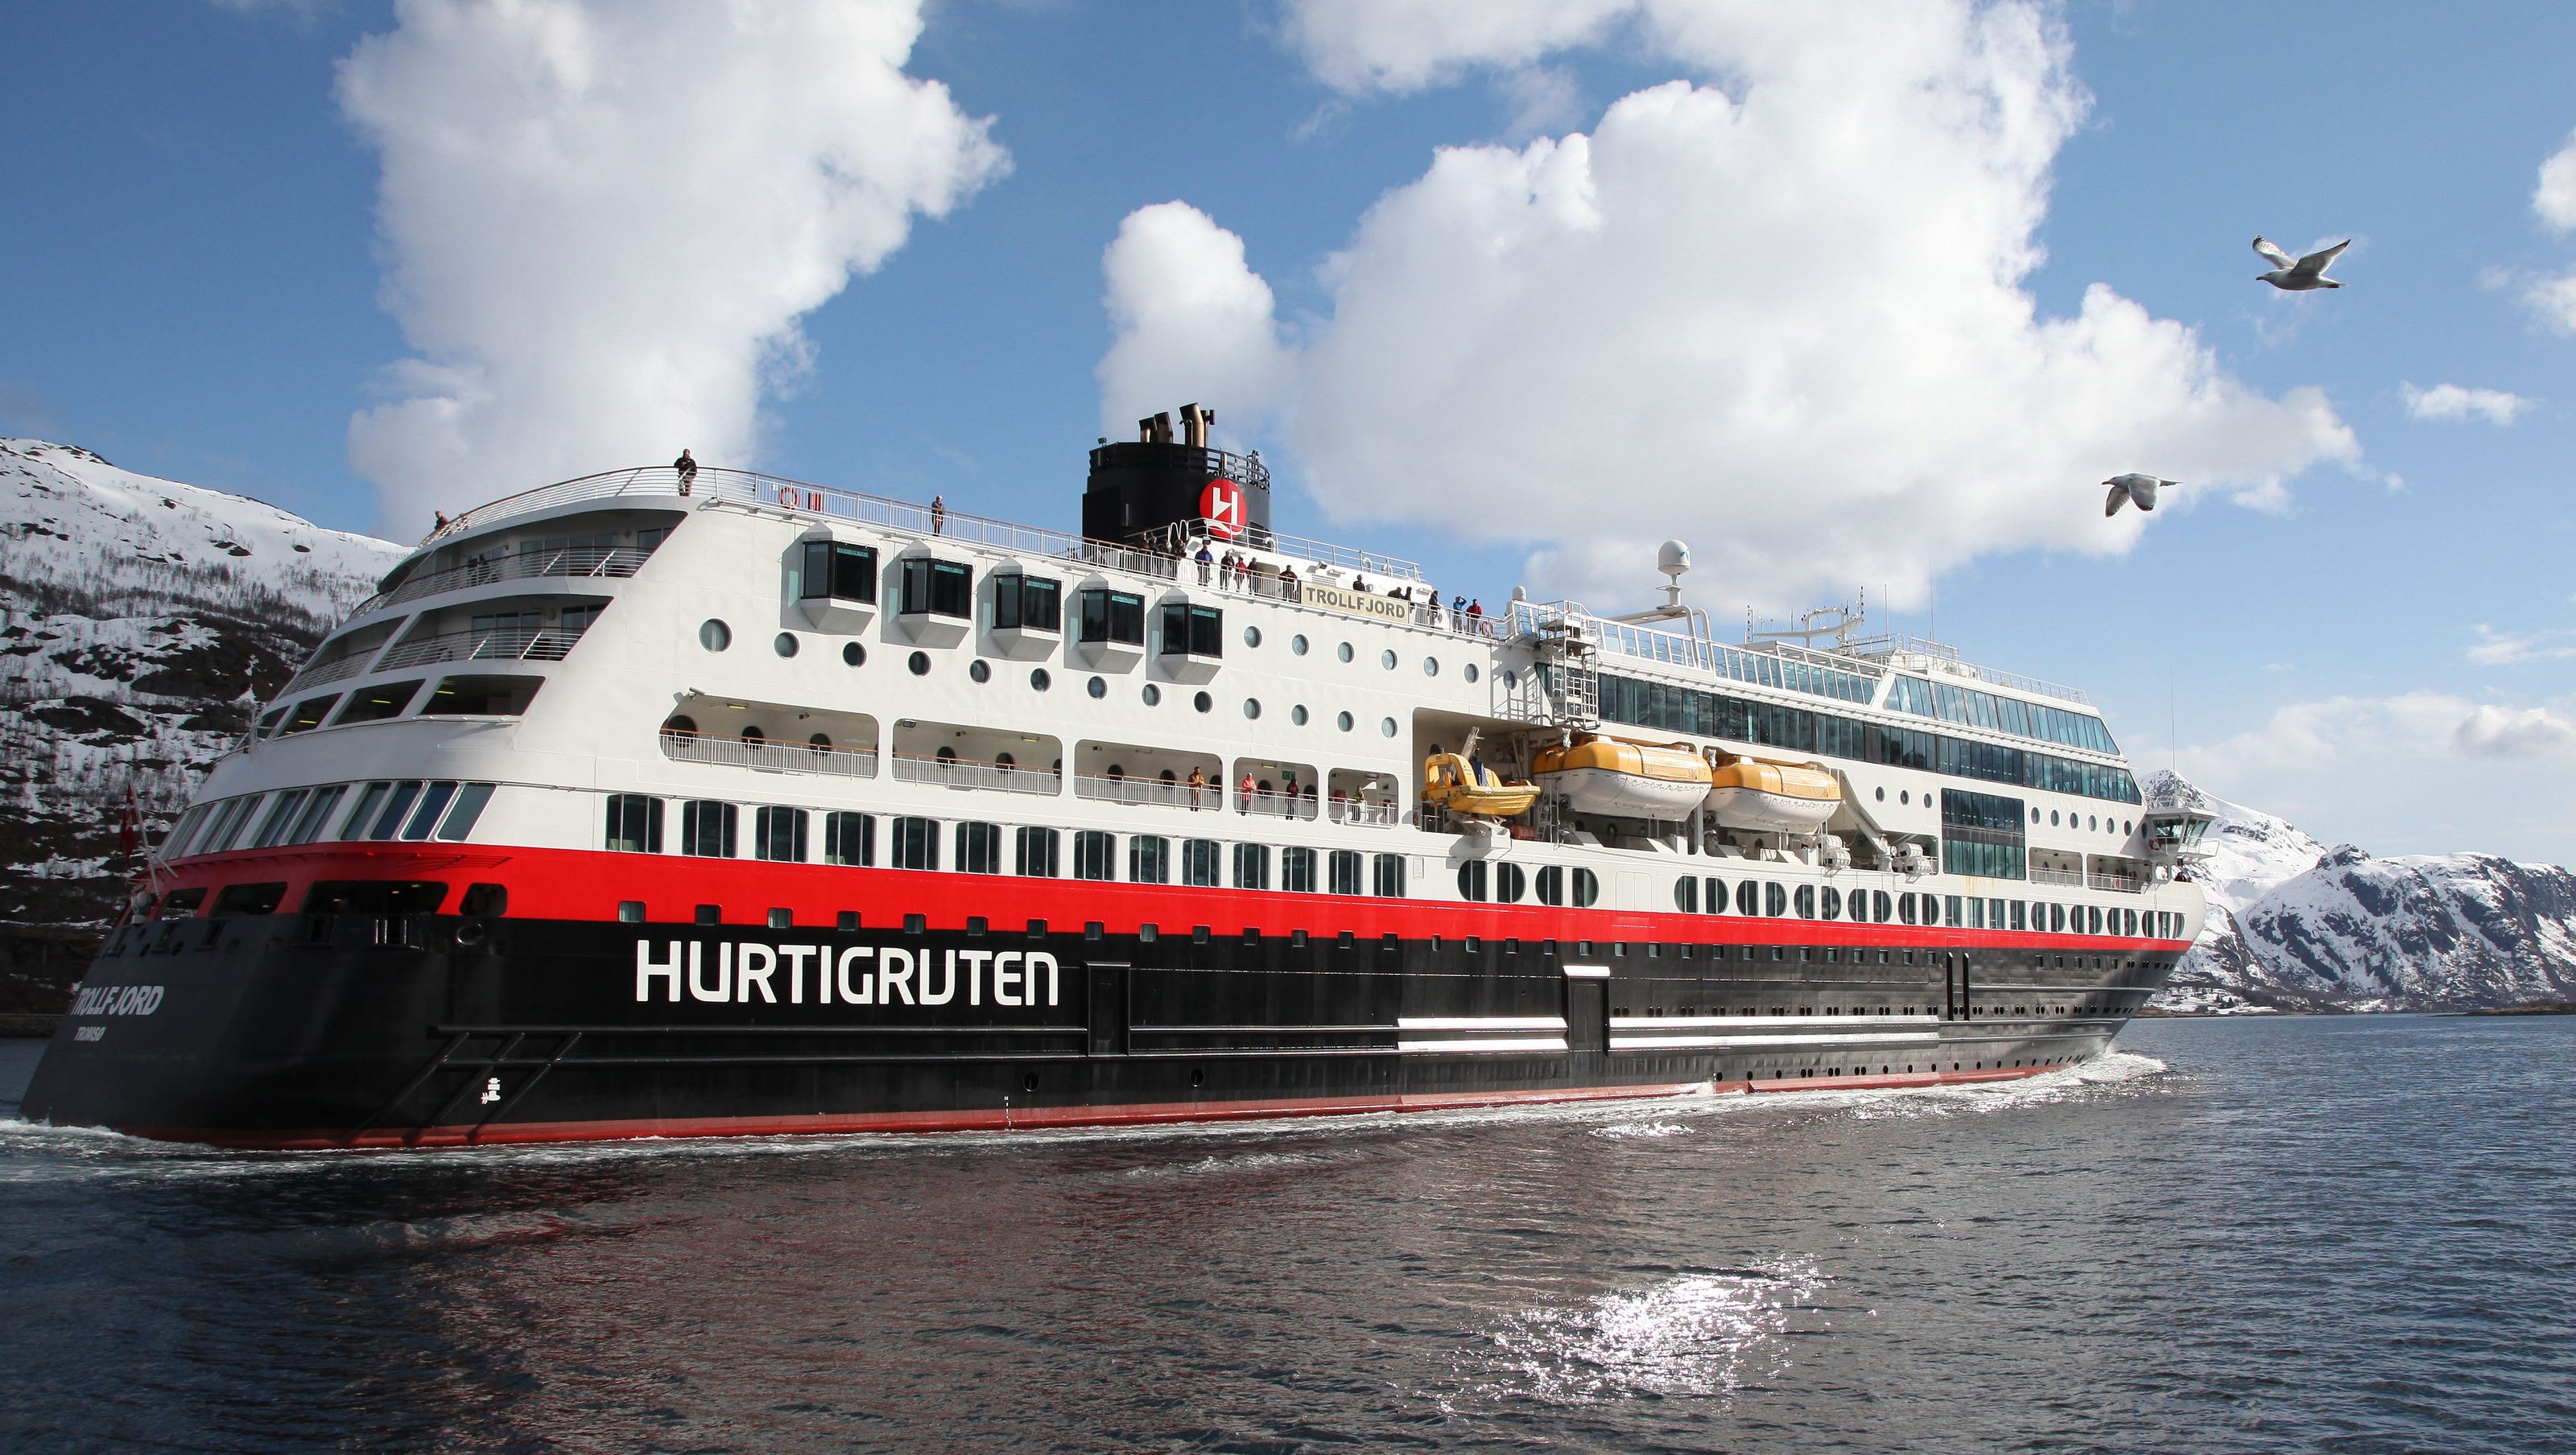 Hurtigruten's Trollfjord A cruise ship designed for Norway's fjords